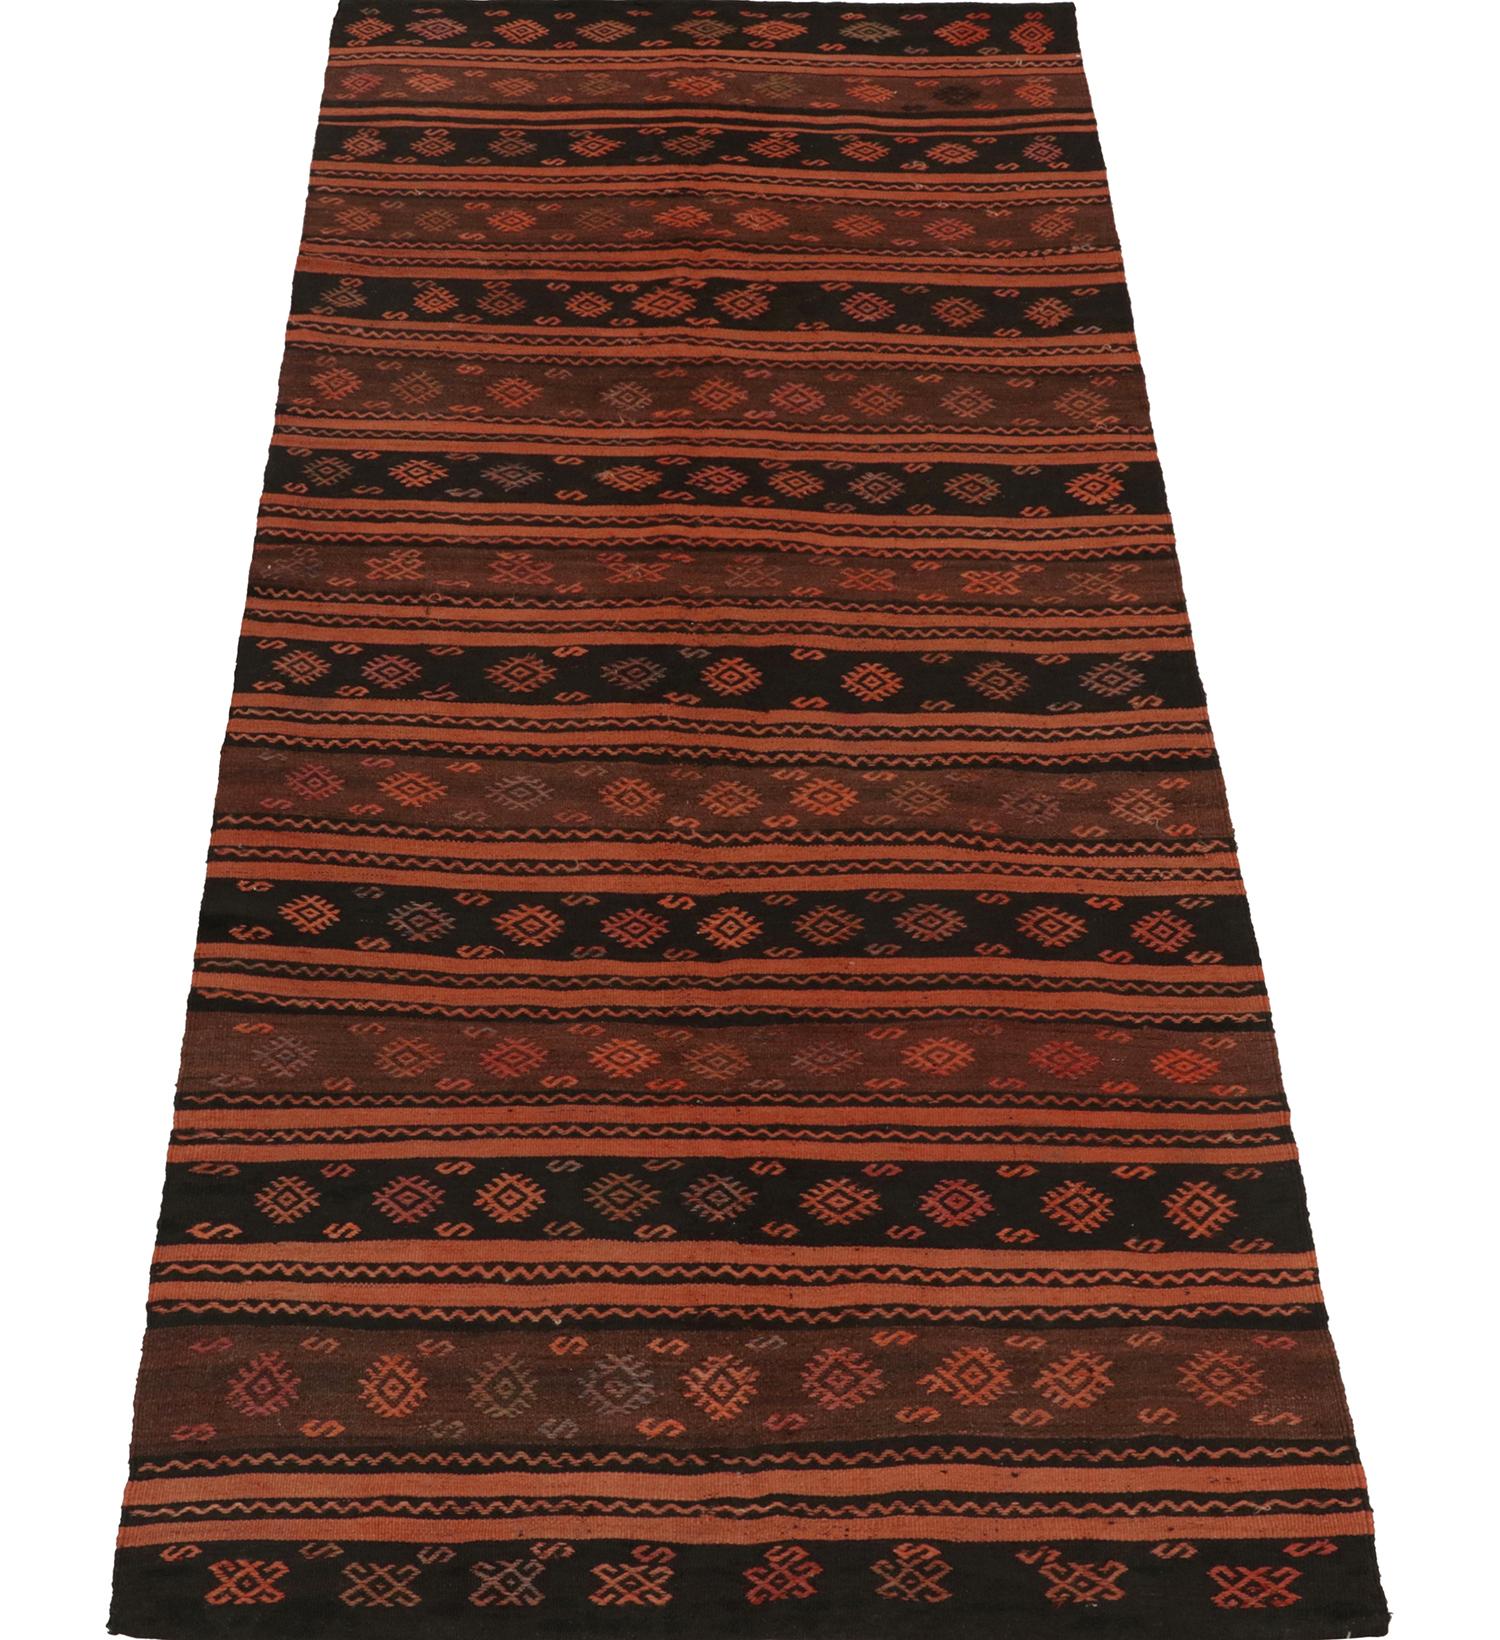 Tribal Vintage Gallery-Sized Kilim in Orange and Black Stripes Patterns by Rug & Kilim For Sale